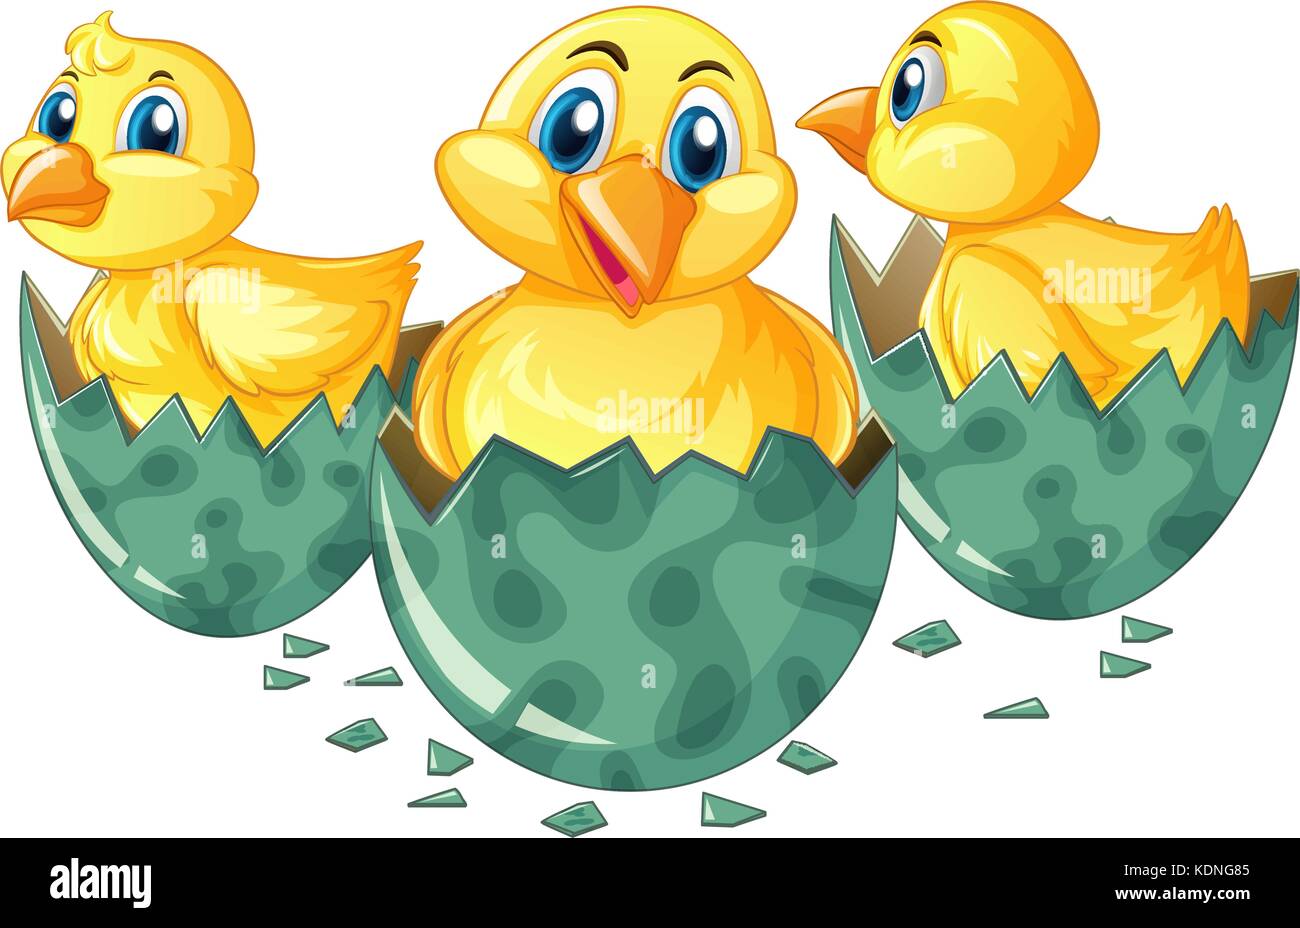 Three little chicks hatching eggs illustration Stock Vector Image & Art ...